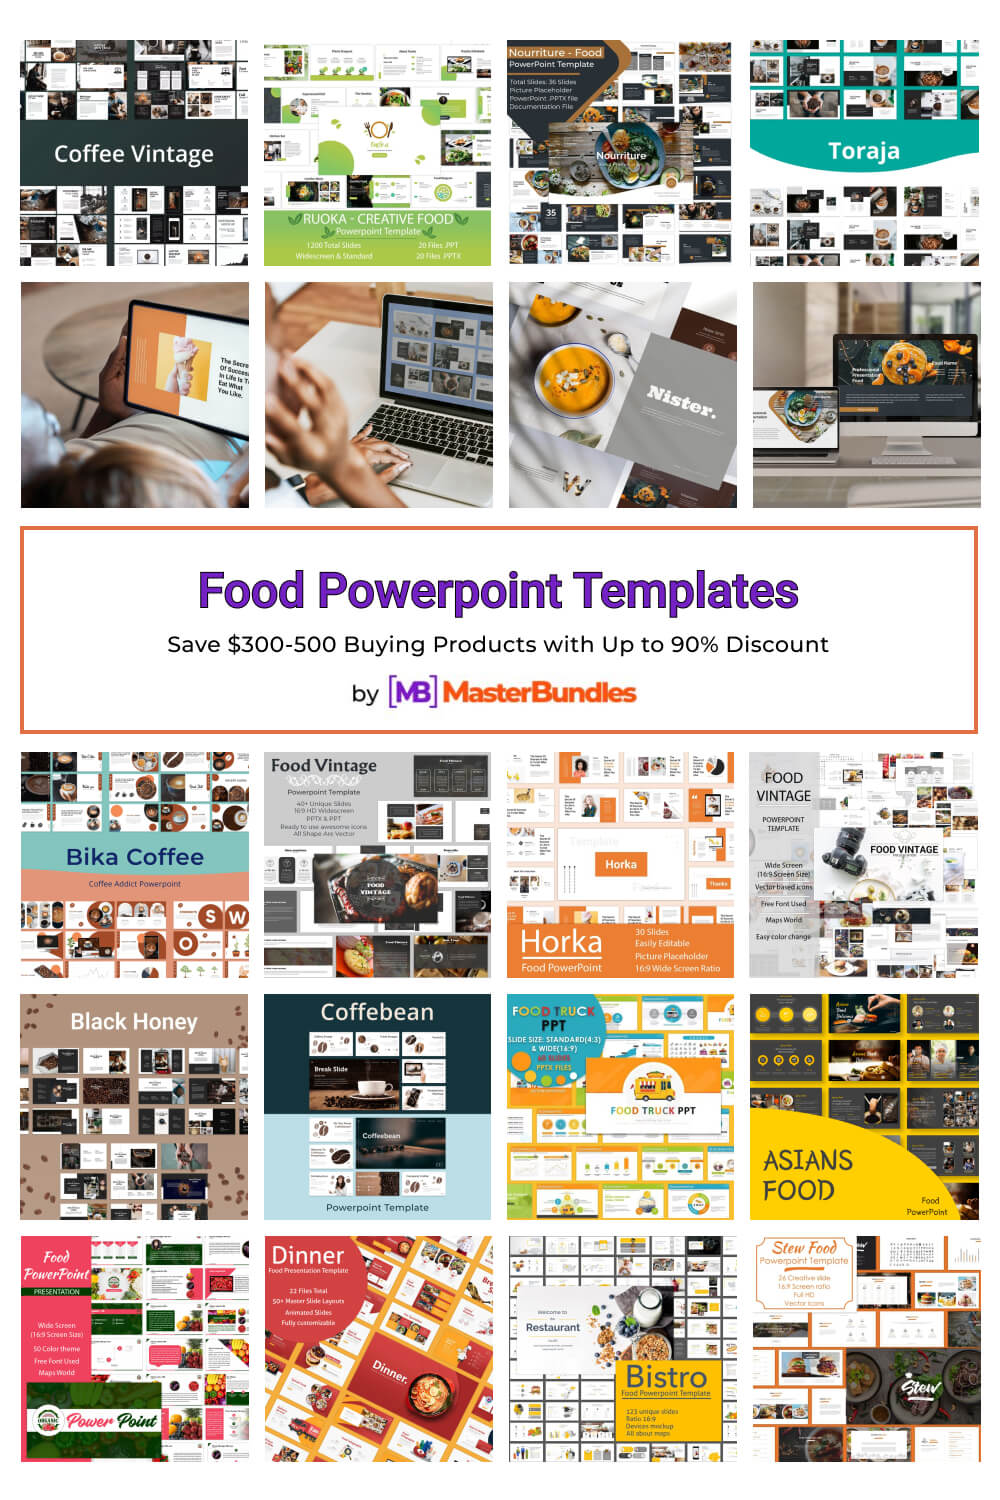 food powerpoint templates pinterest image.